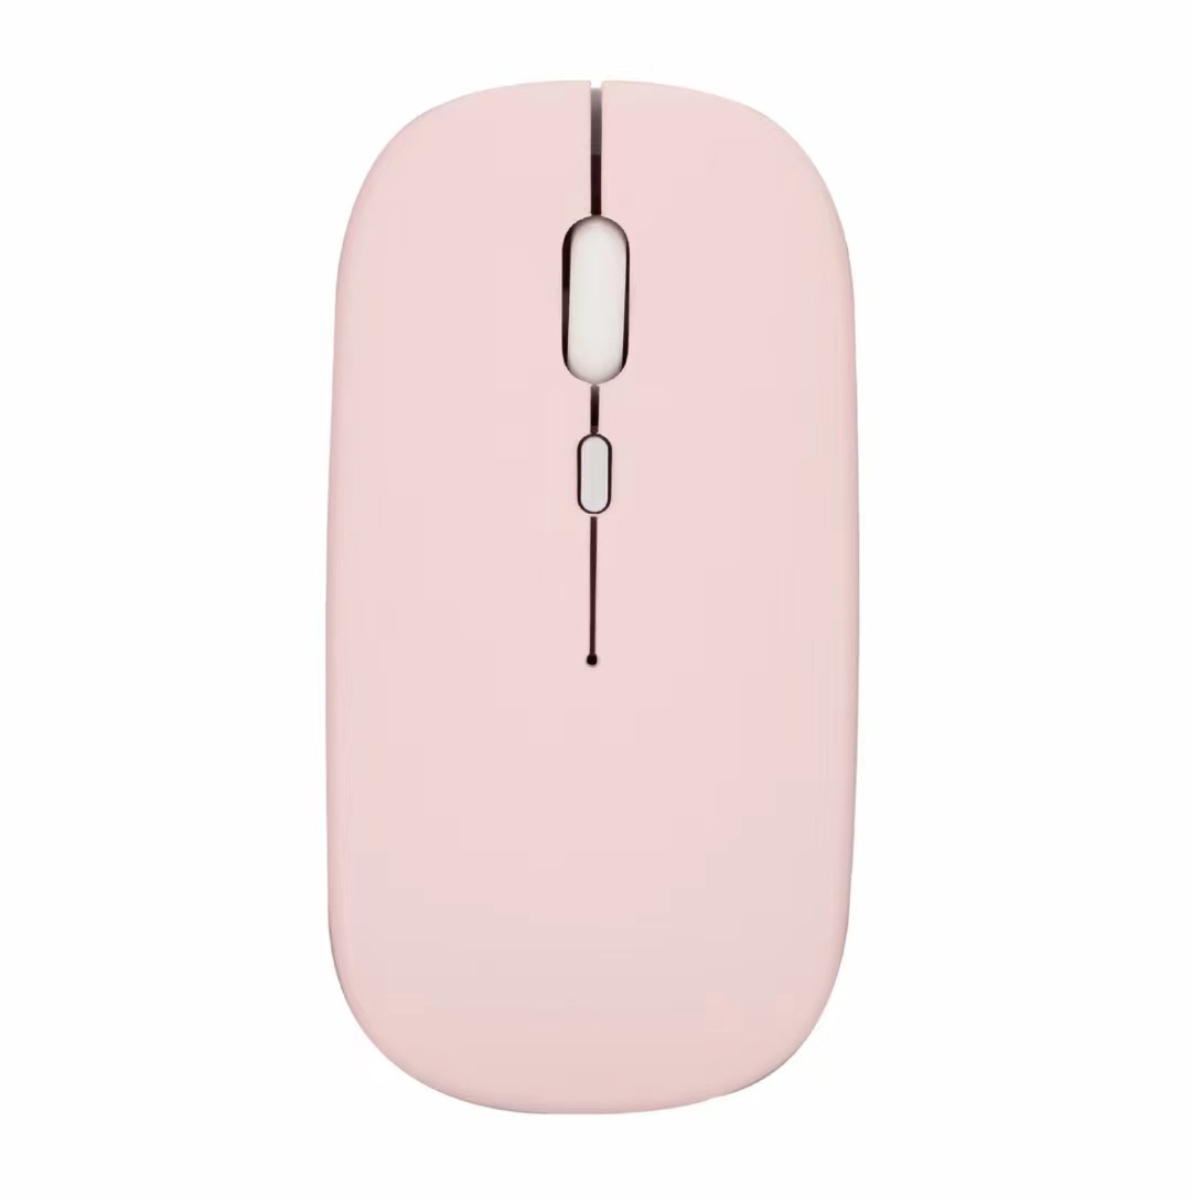 Беспроводная мышь ULIKE R1095 розовый